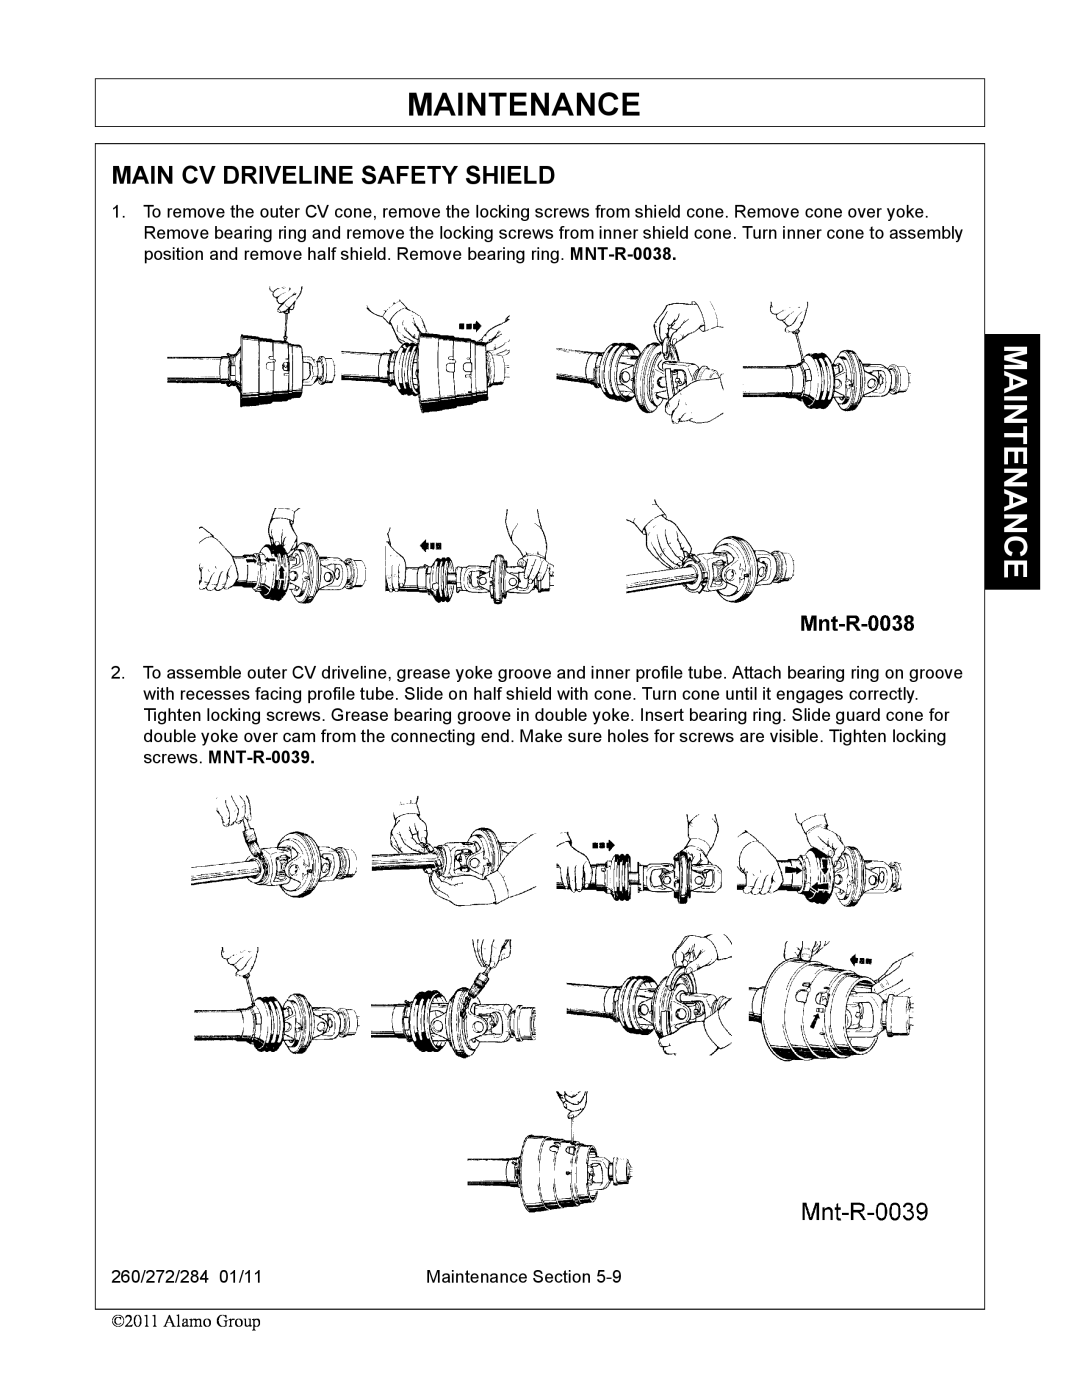 Alamo 260, 284, 272 manual Main Cv Driveline Safety Shield, Maintenance 